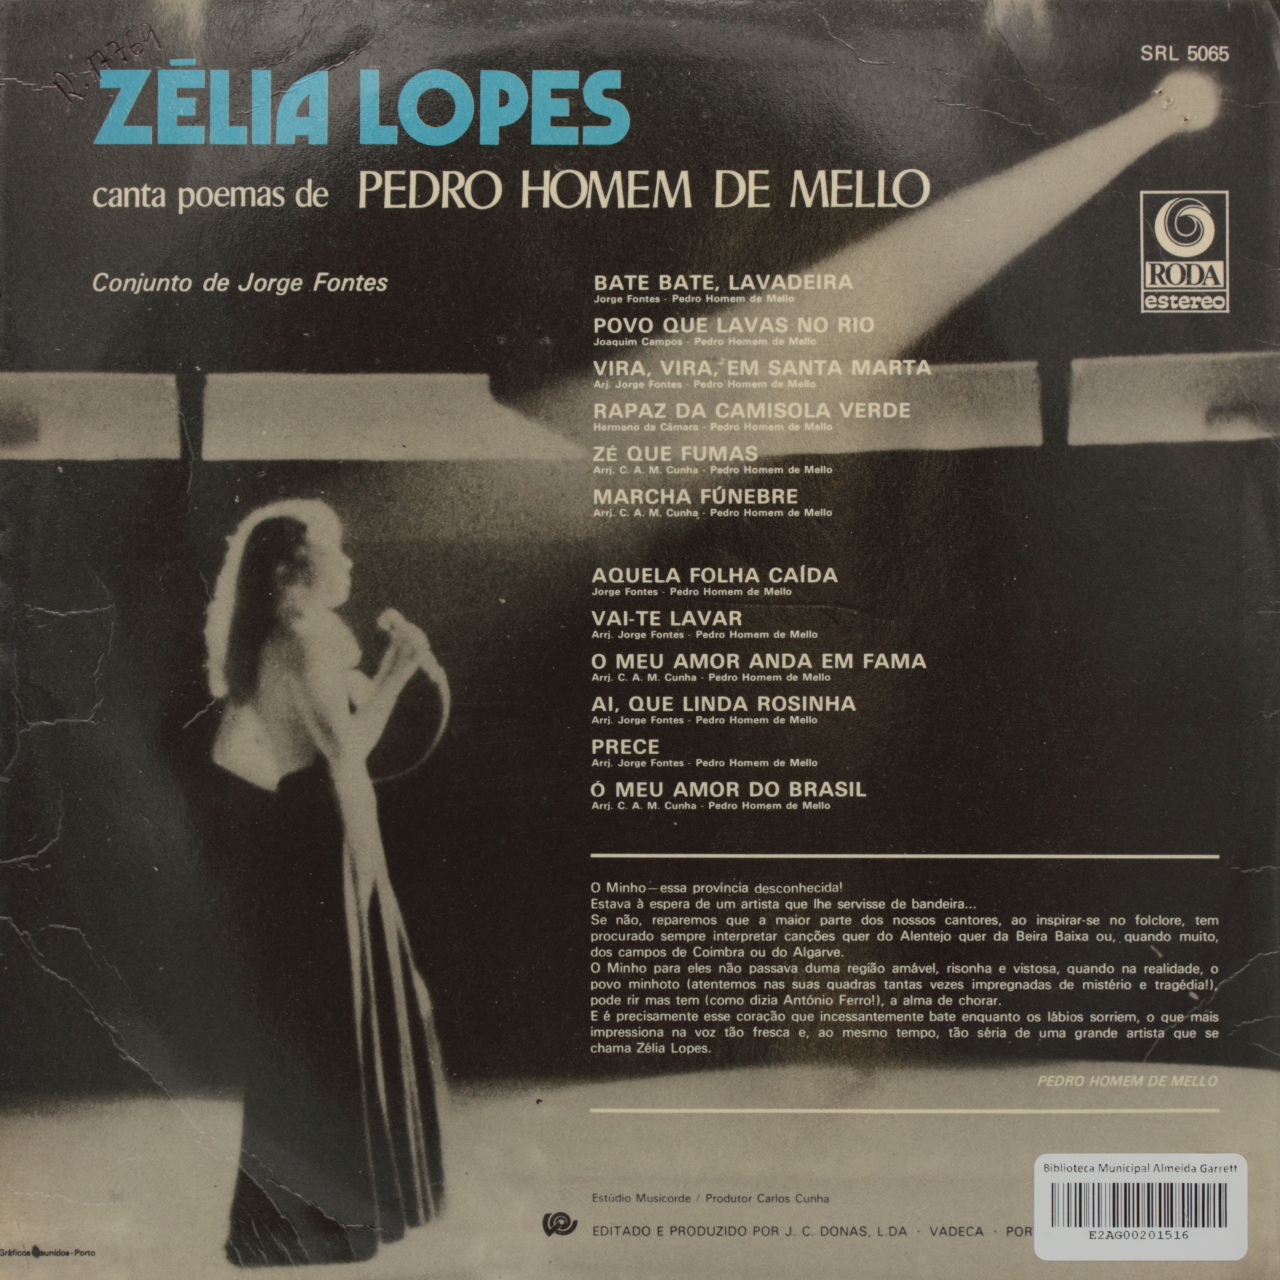 Zélia Lopes canta poemas de Pedro Homem de Mello